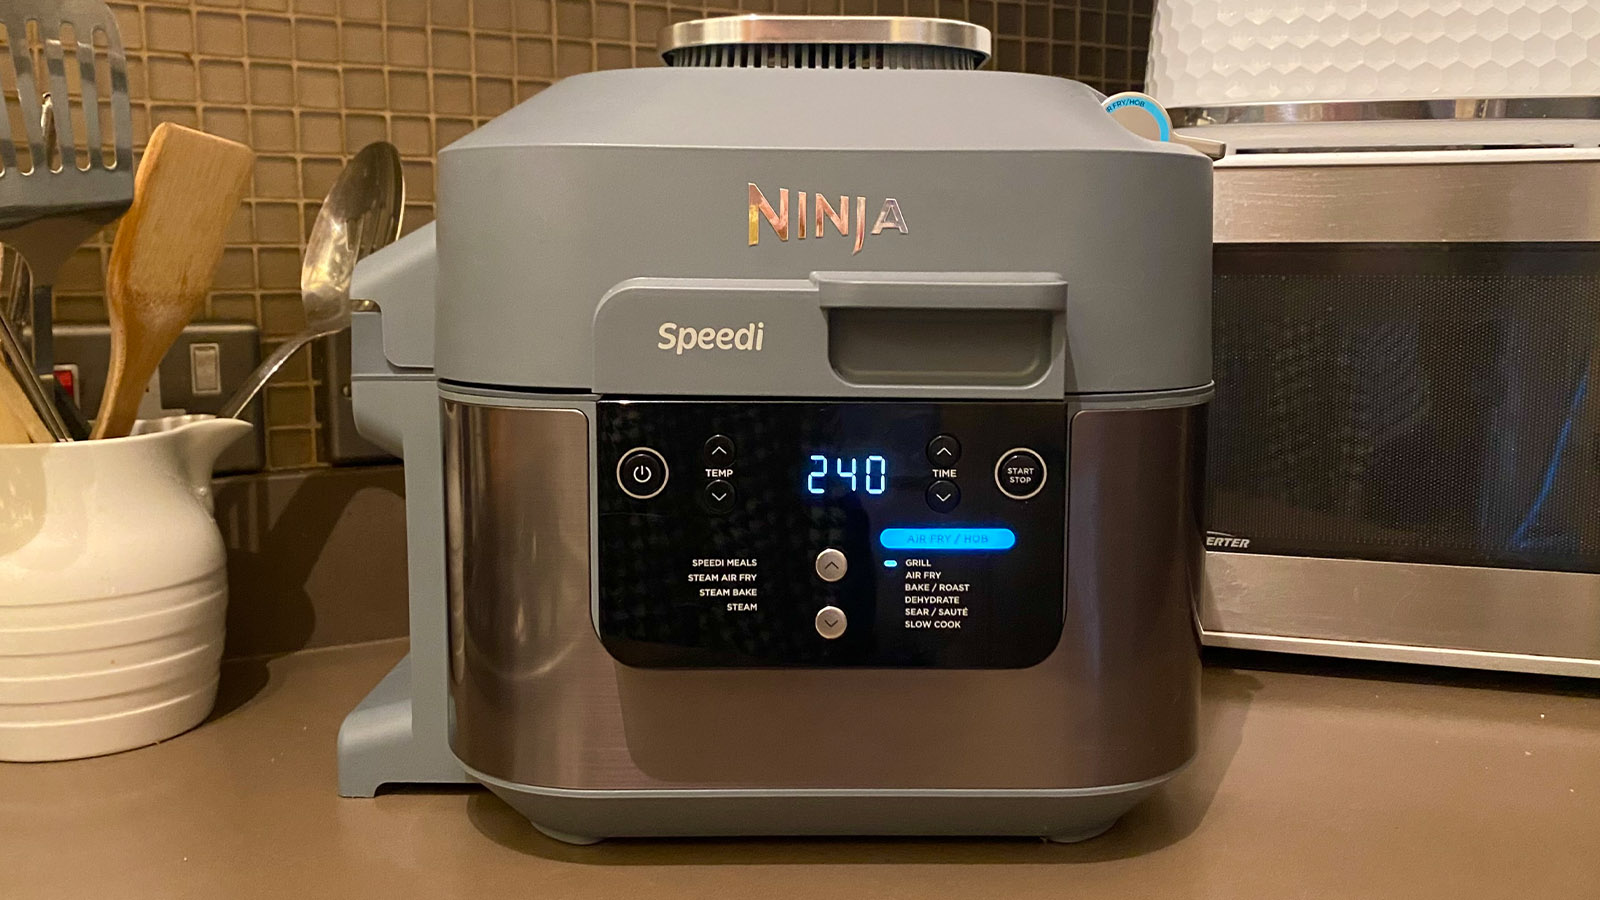 Ninja Speedi – Best multifunctional air fryer